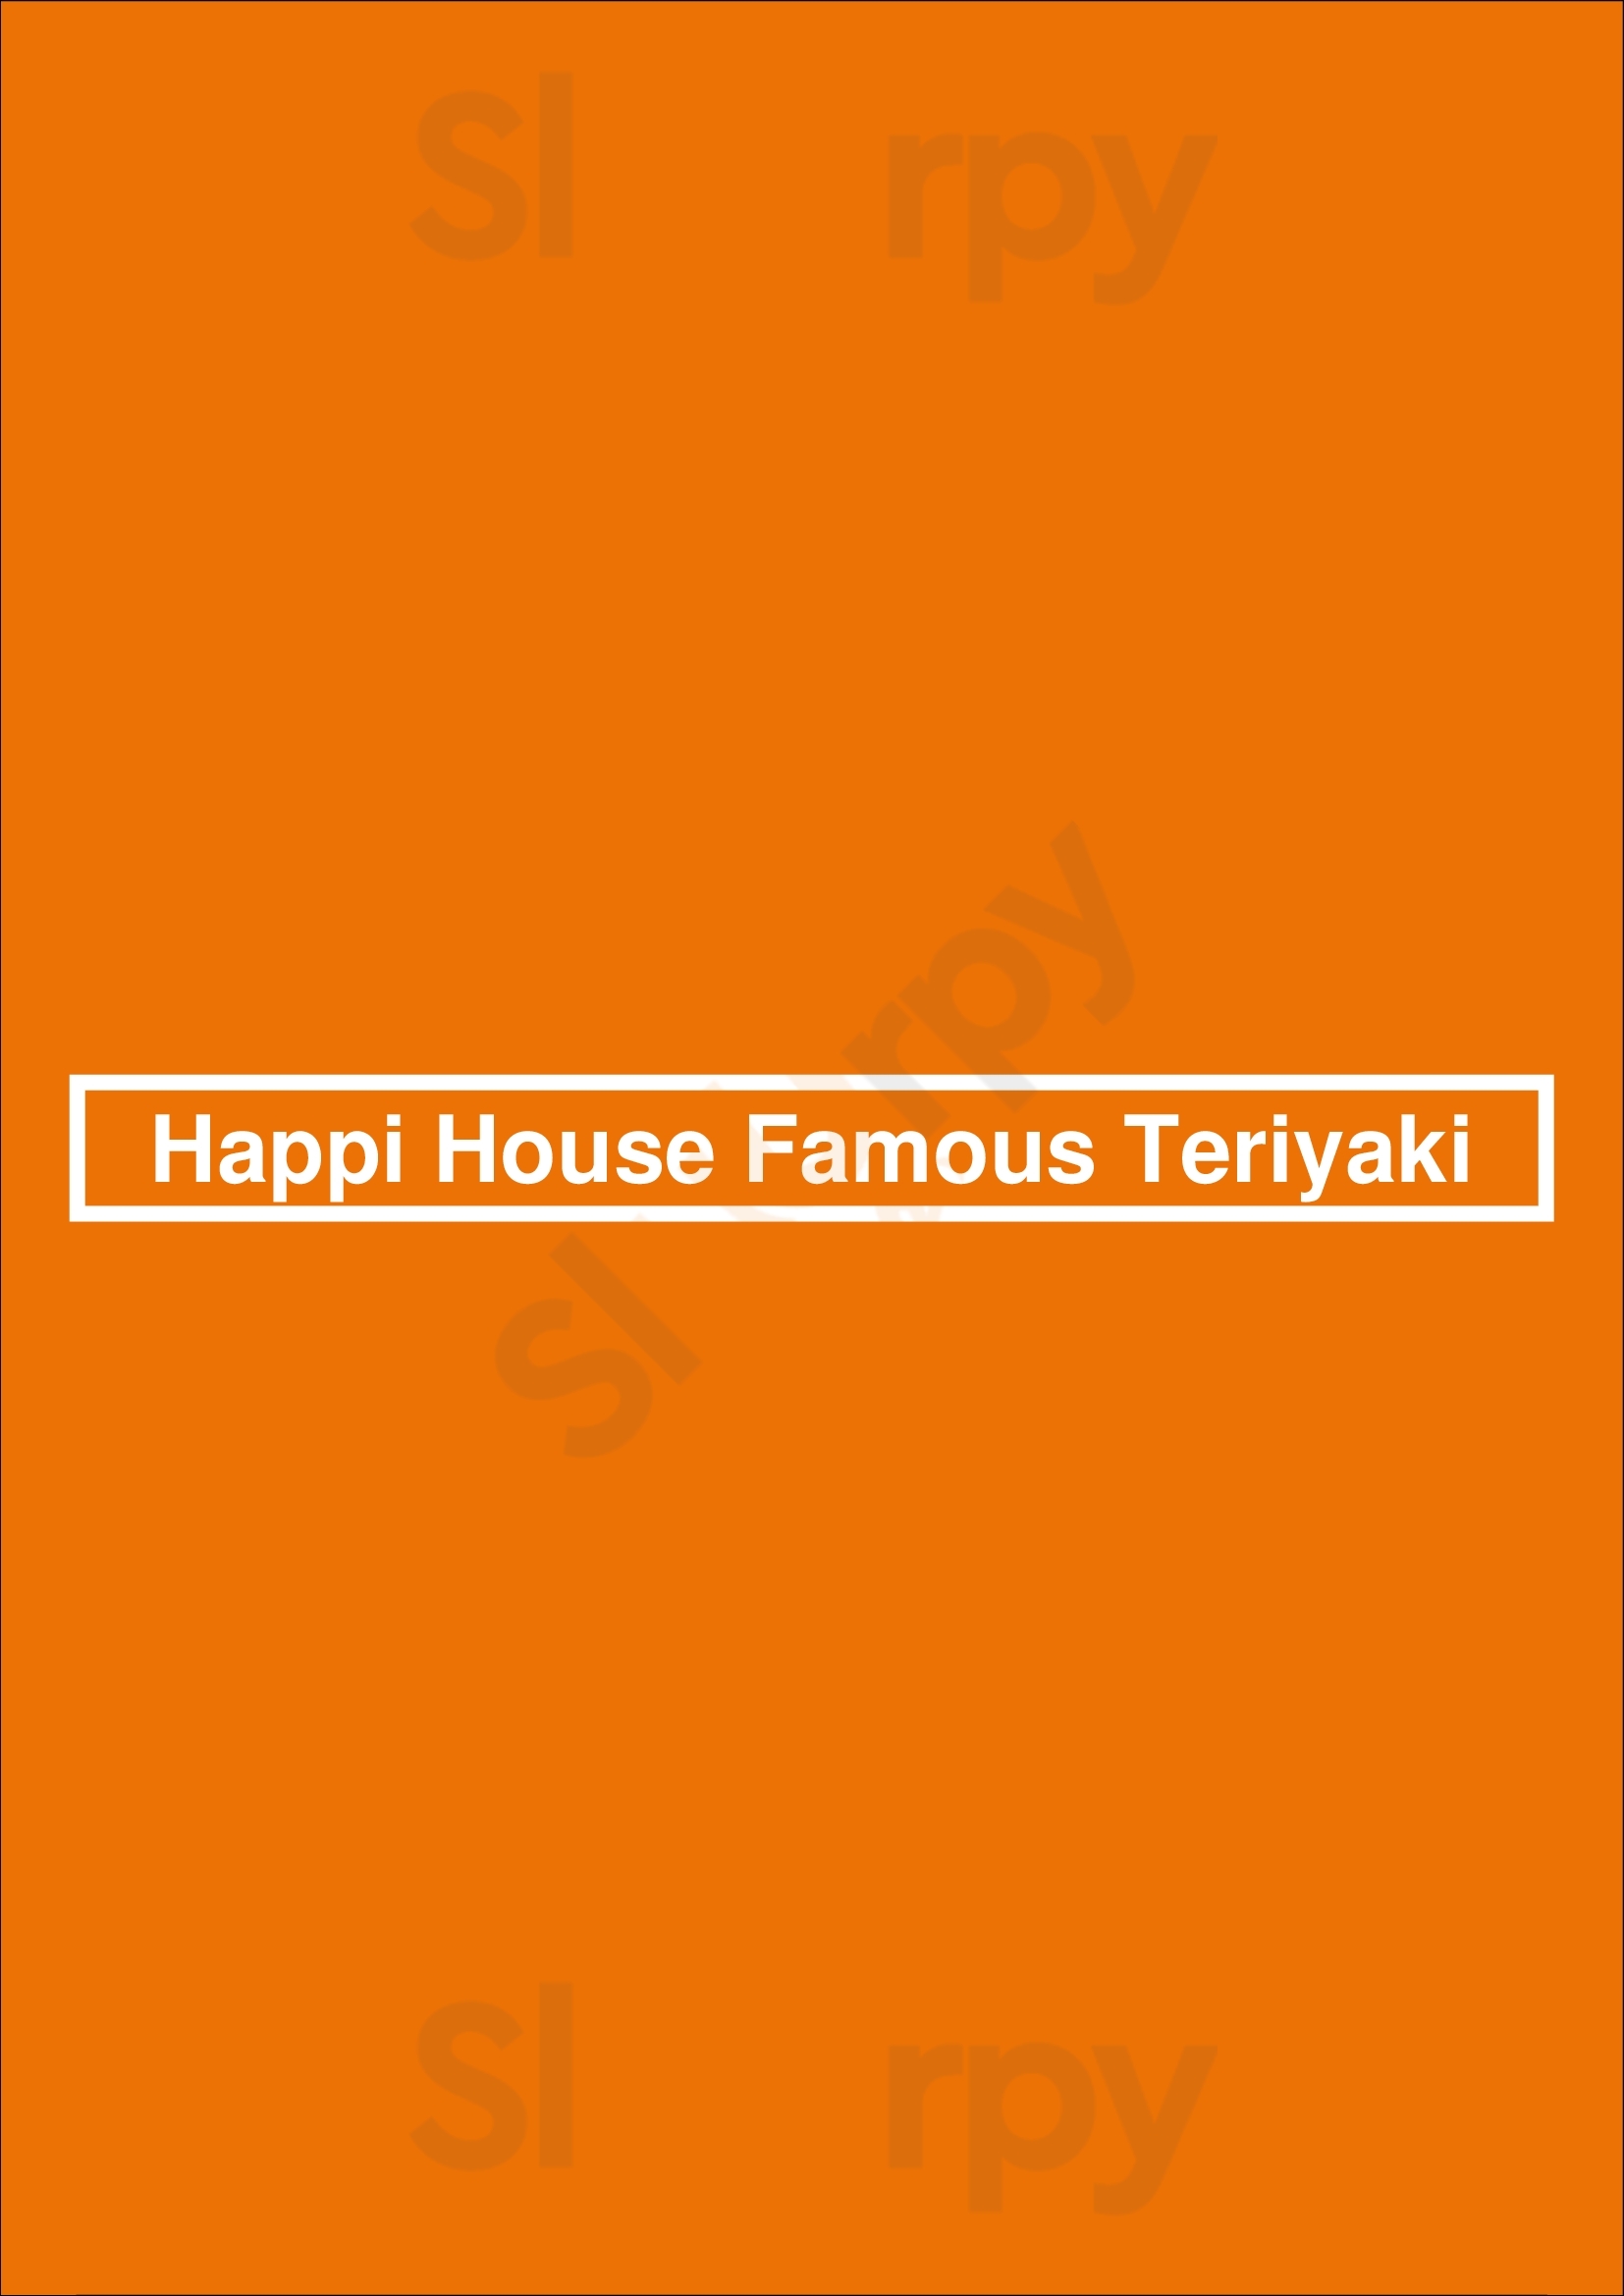 Happi House Famous Teriyaki San Jose Menu - 1